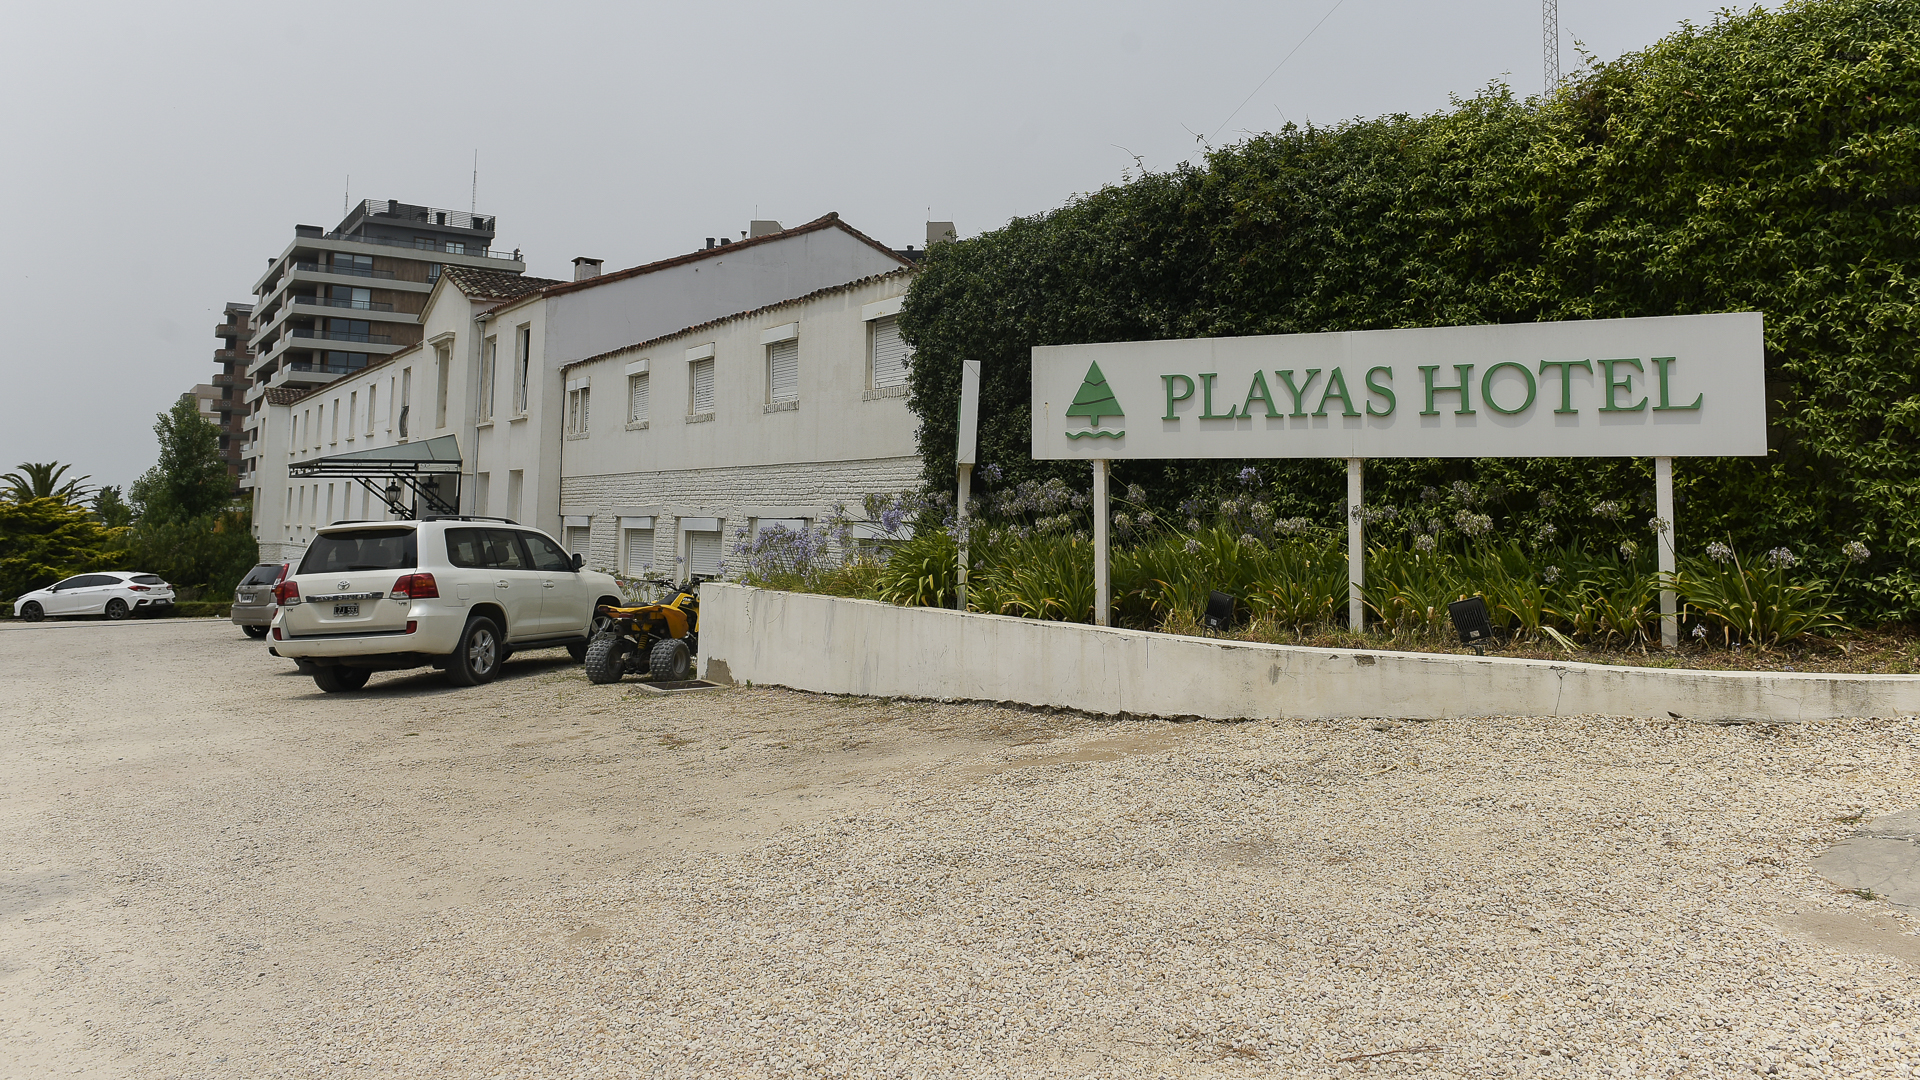 El Playas Hotel se ubica en la Av. Arquitecto Jorge Bunge 250 (Gustavo Gavotti)